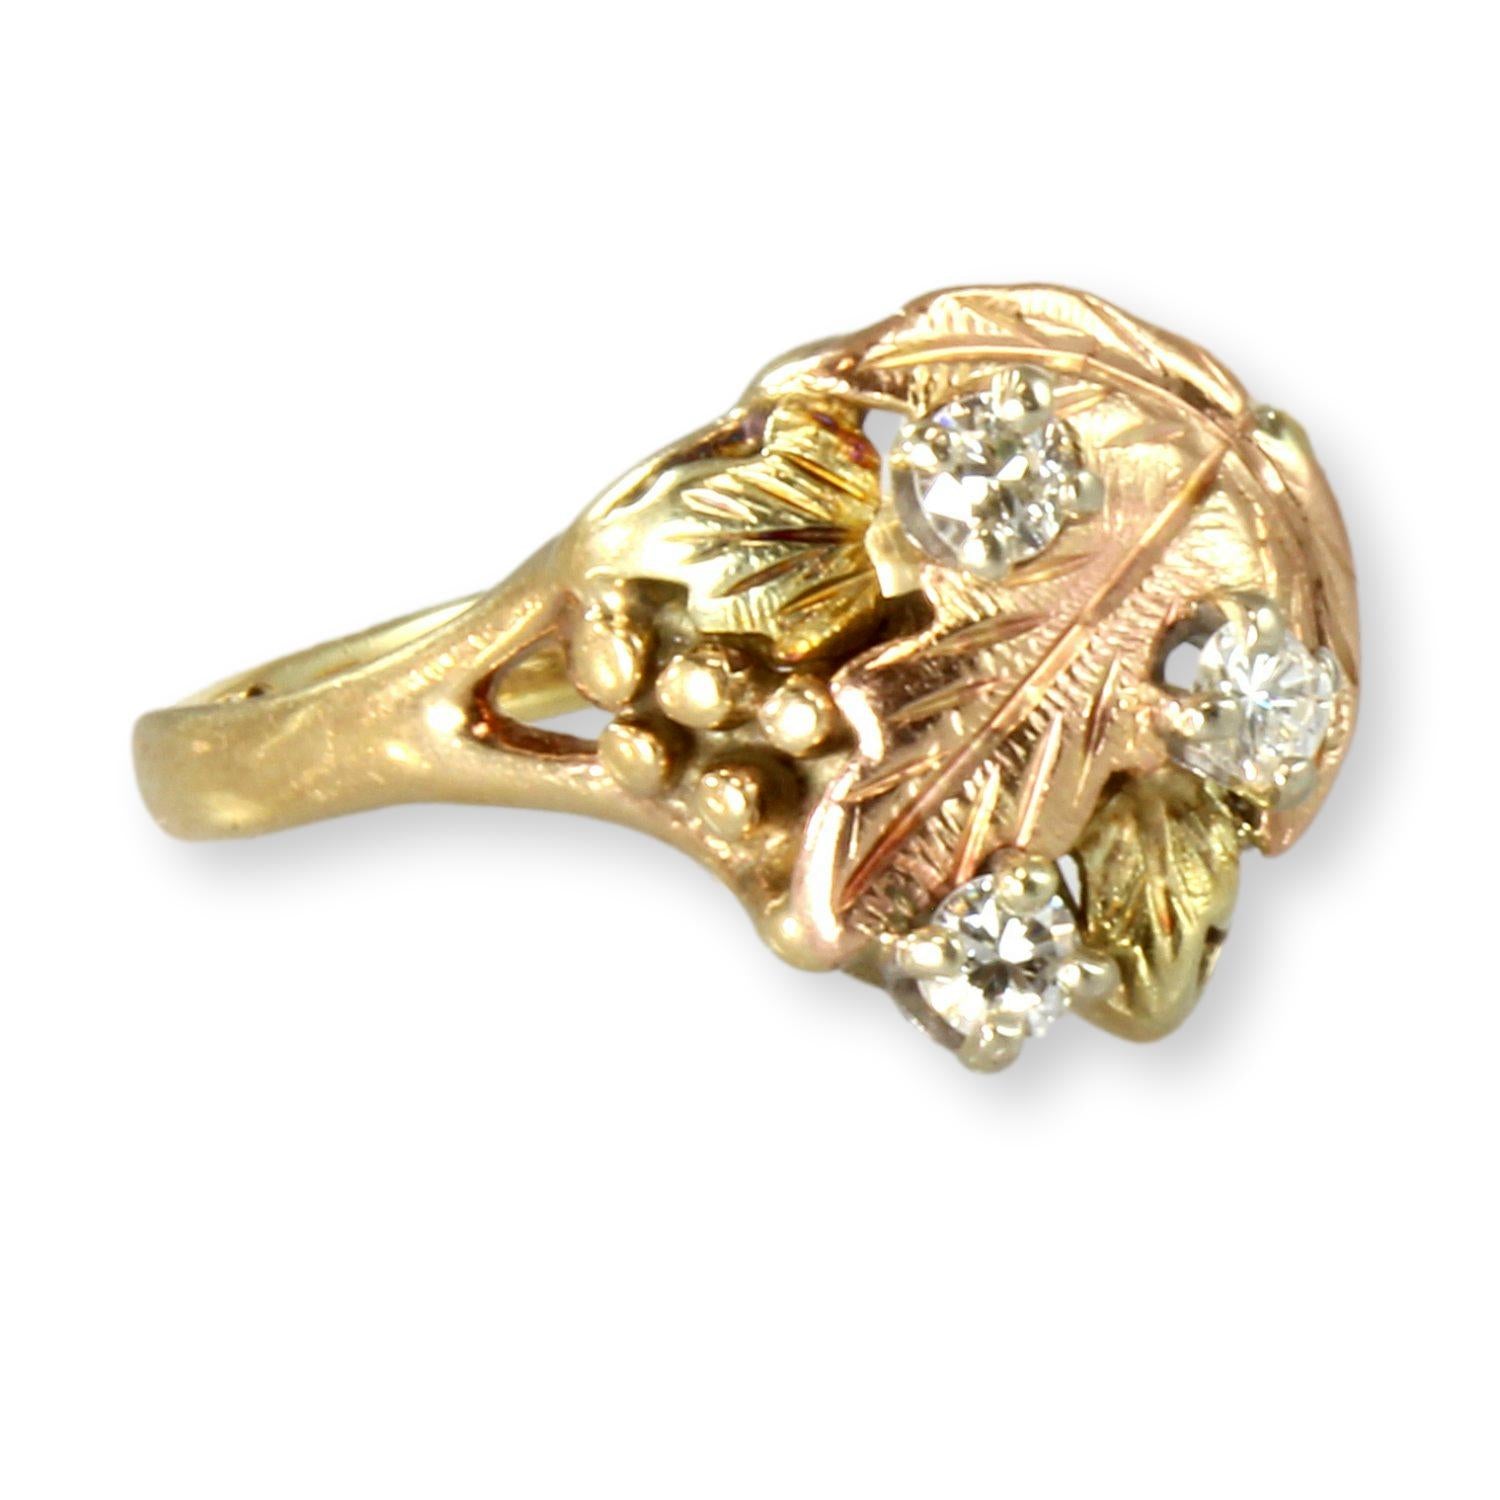 Black Hills gold ring floral band size 5.75 women girls – SpiritbeadNW